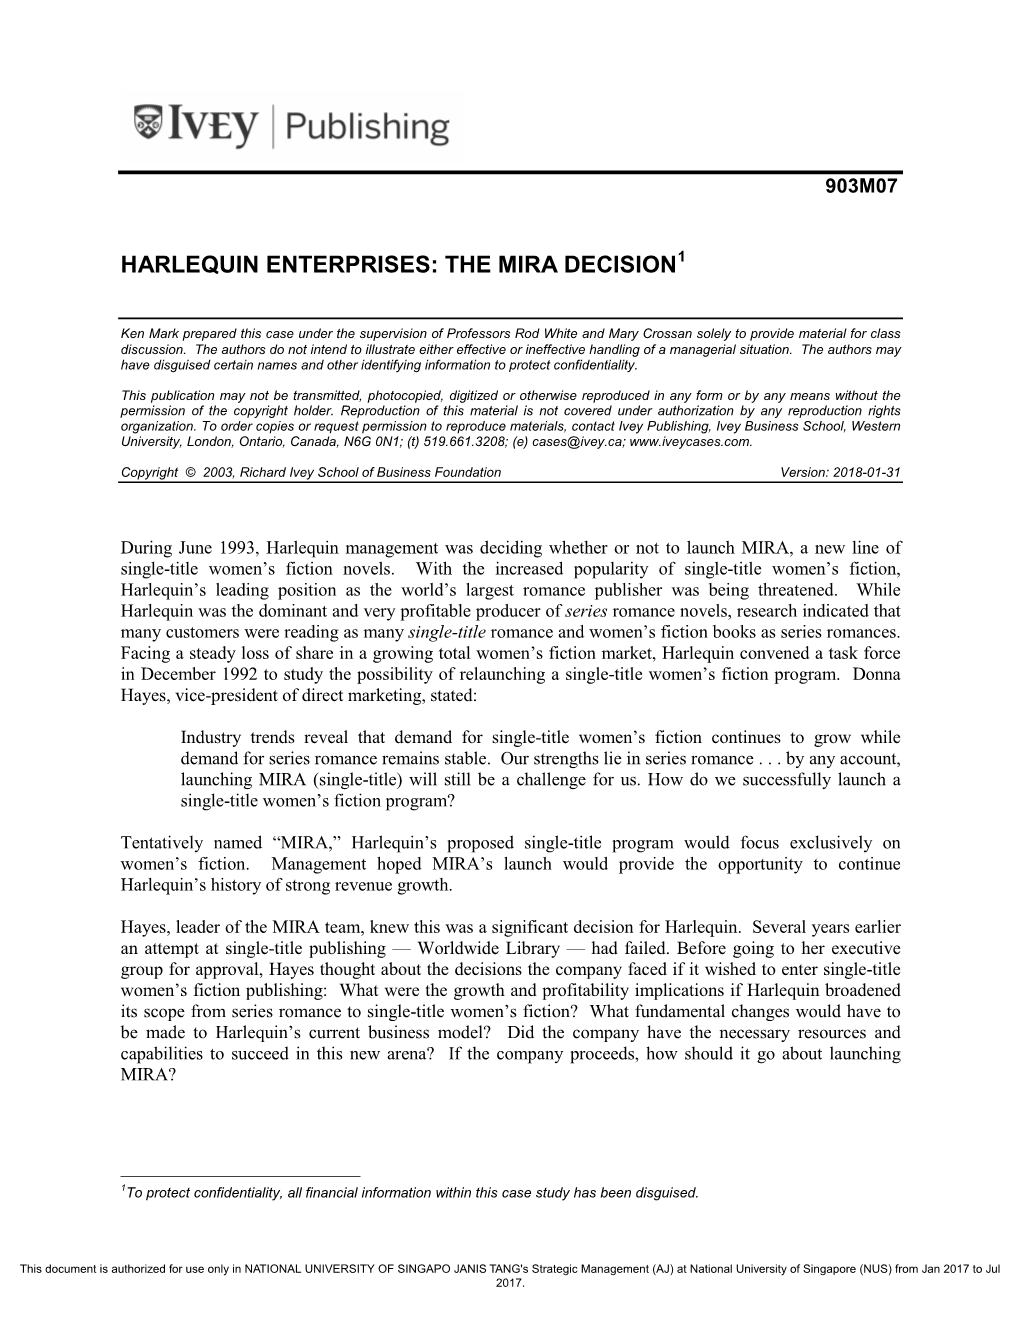 Harlequin Enterprises: the Mira Decision